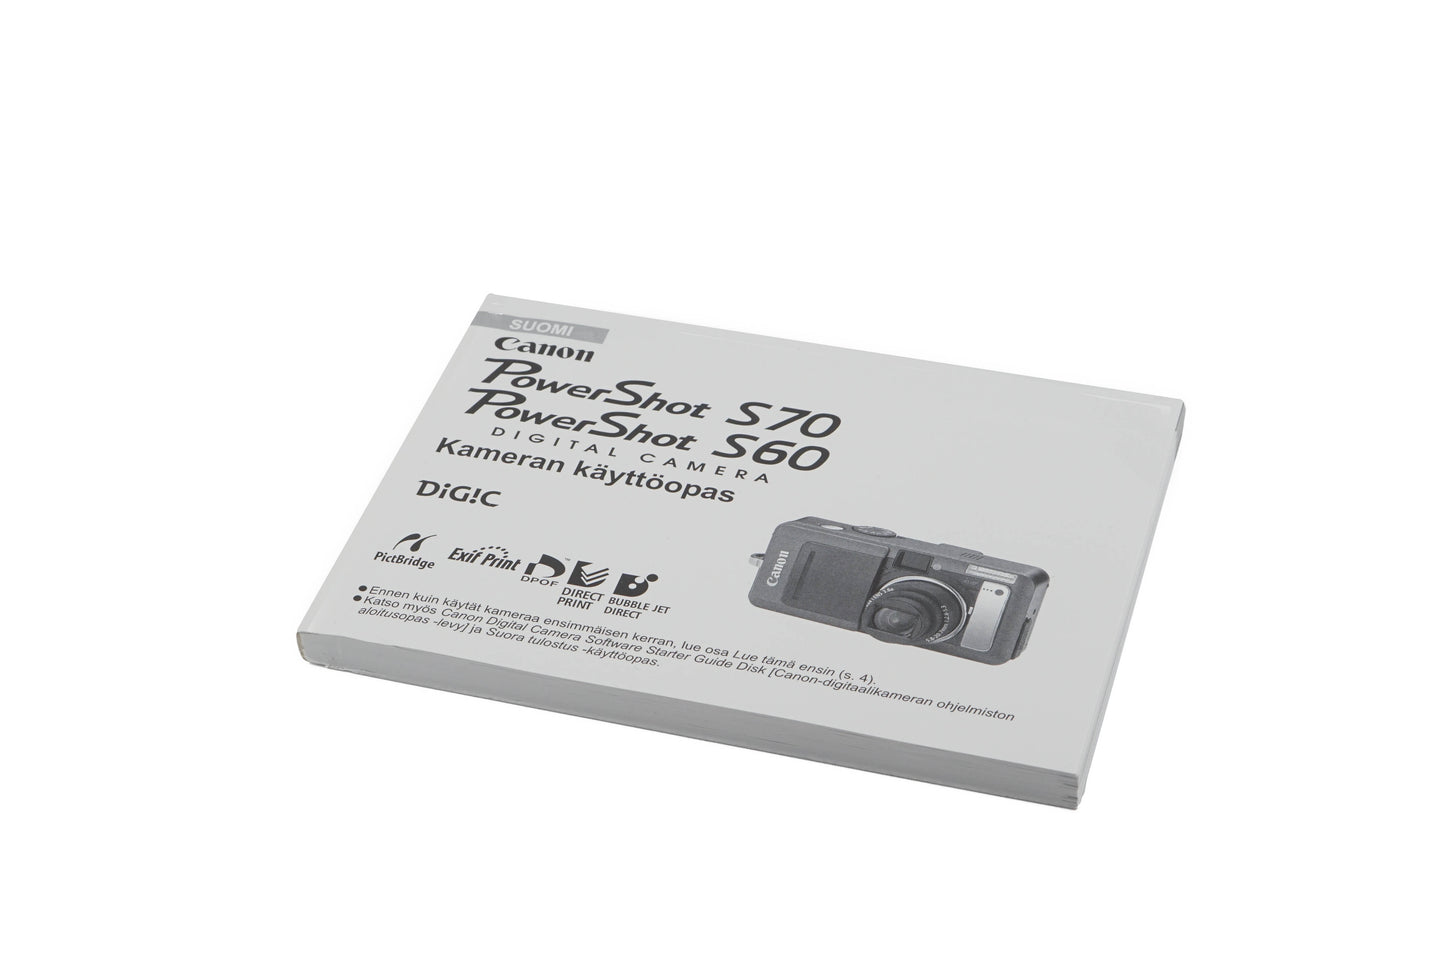 Canon PowerShot S70/S60 Instructions